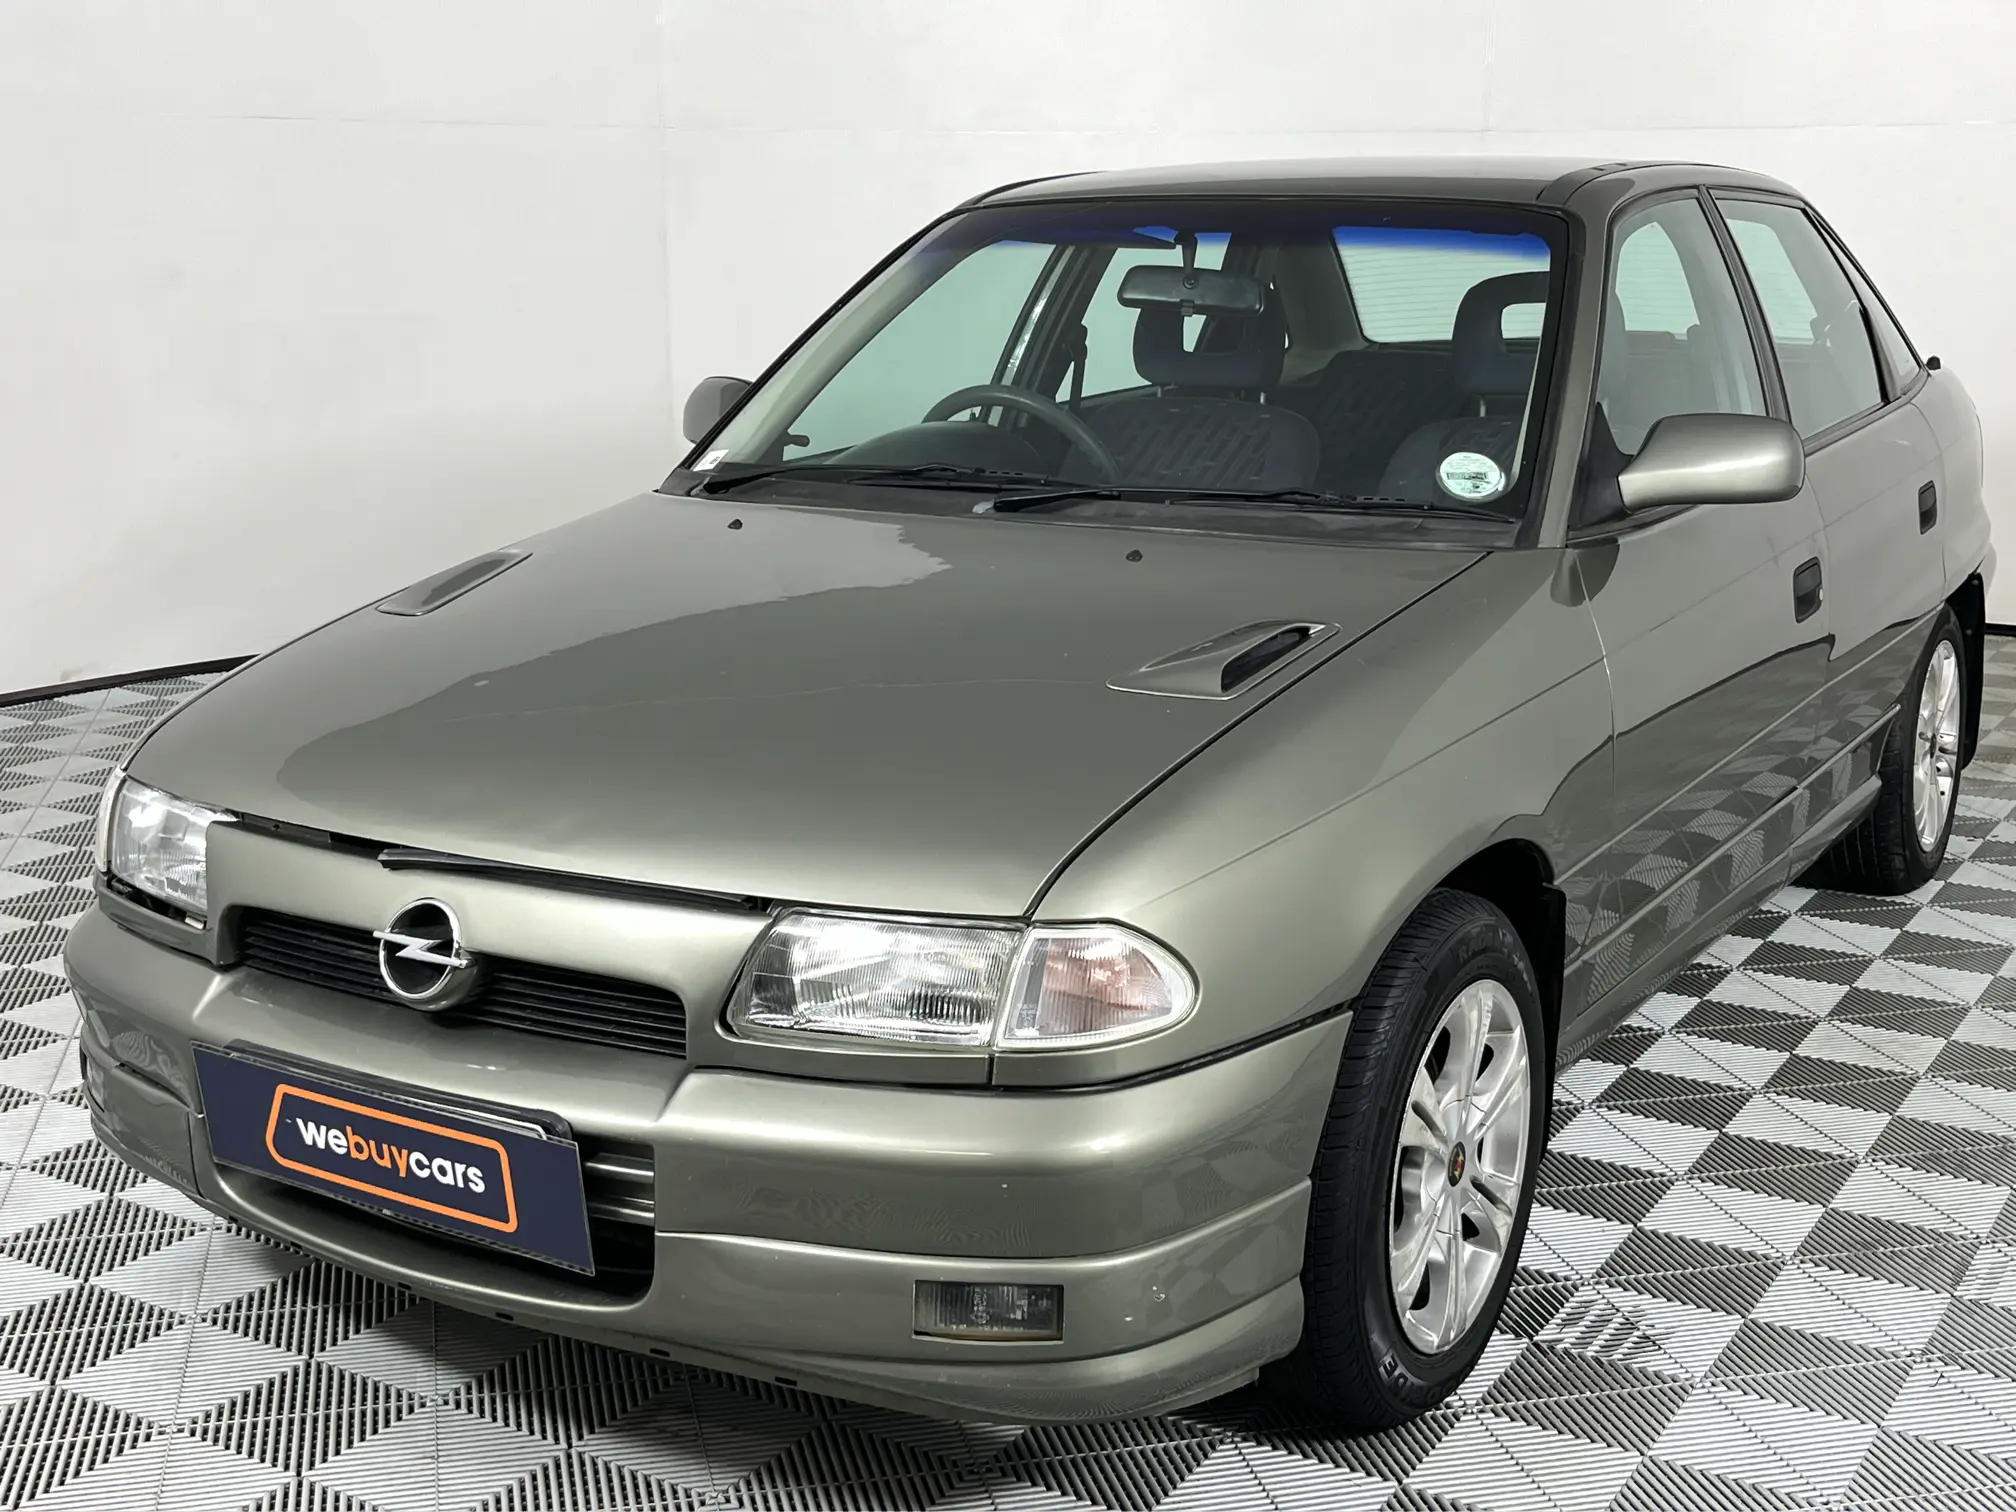 1999 Opel Astra 200i A/C